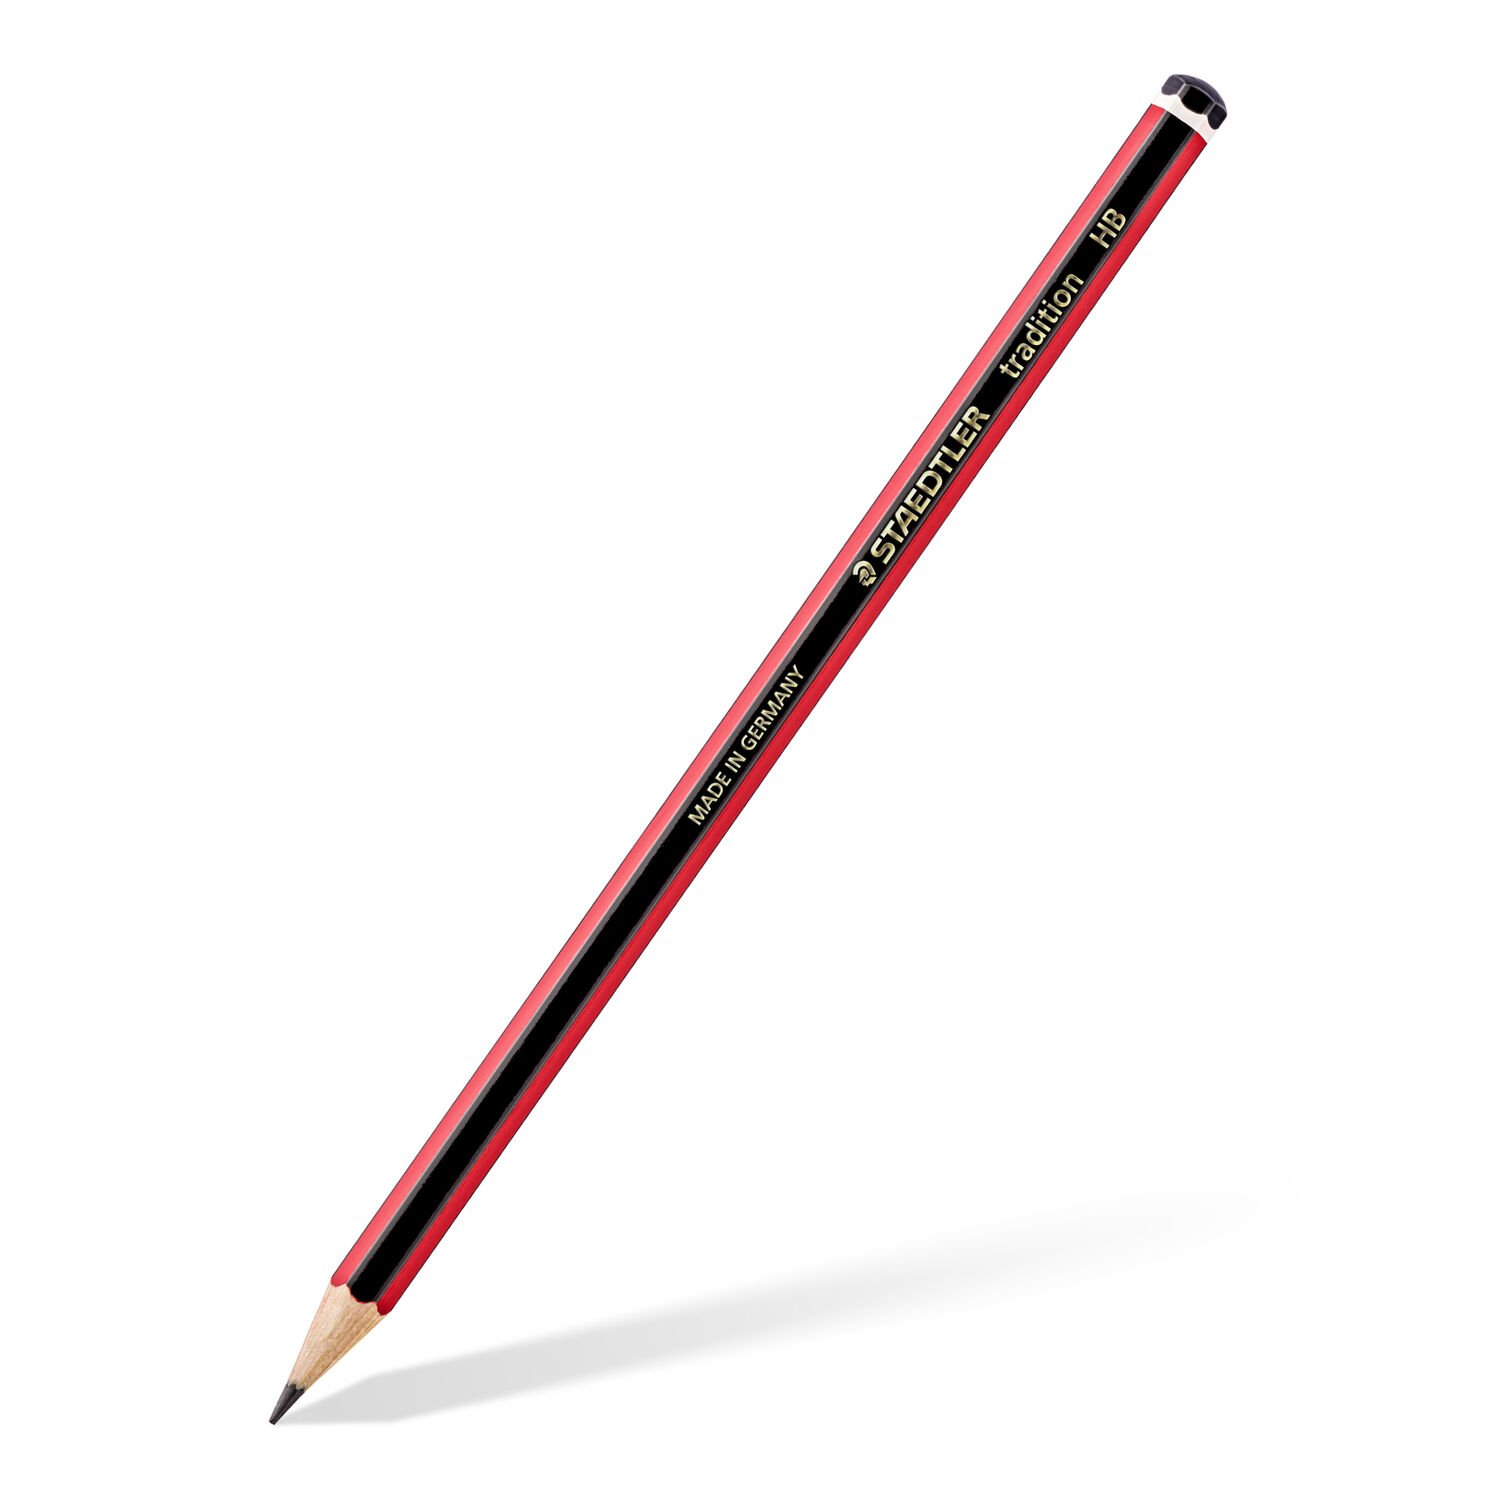 Staedtler Pencil 6B 110